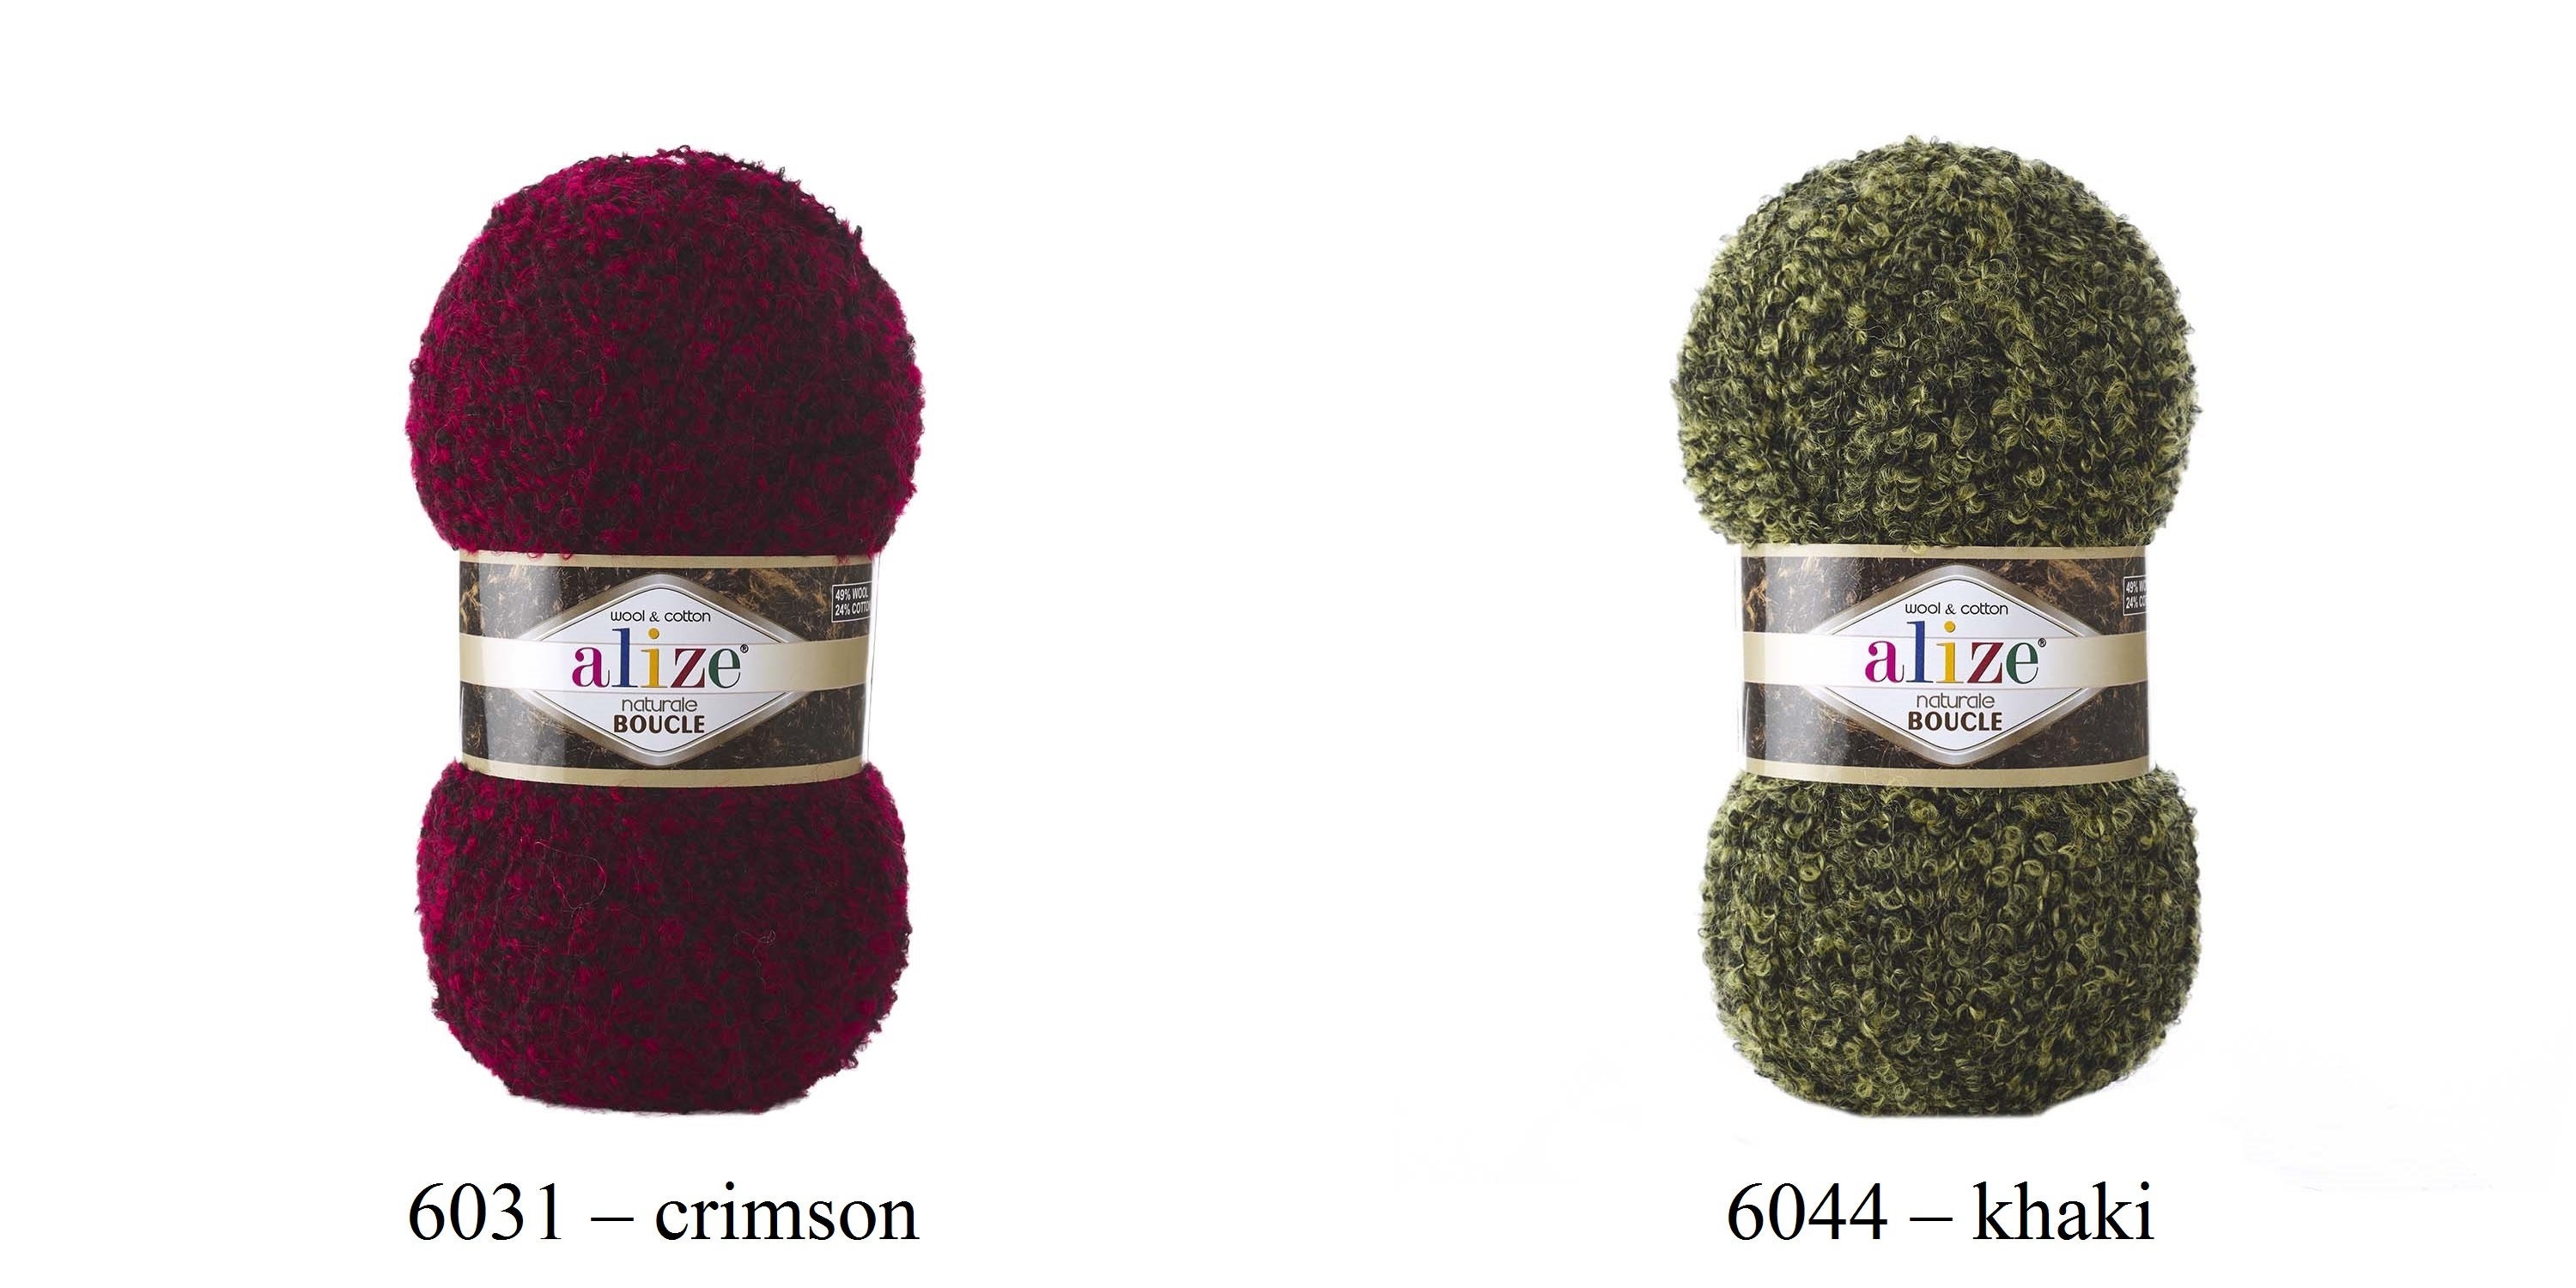 Alize Naturale Boucle, 49% Wool, 24% Cotton, 24% Acrylic, 3